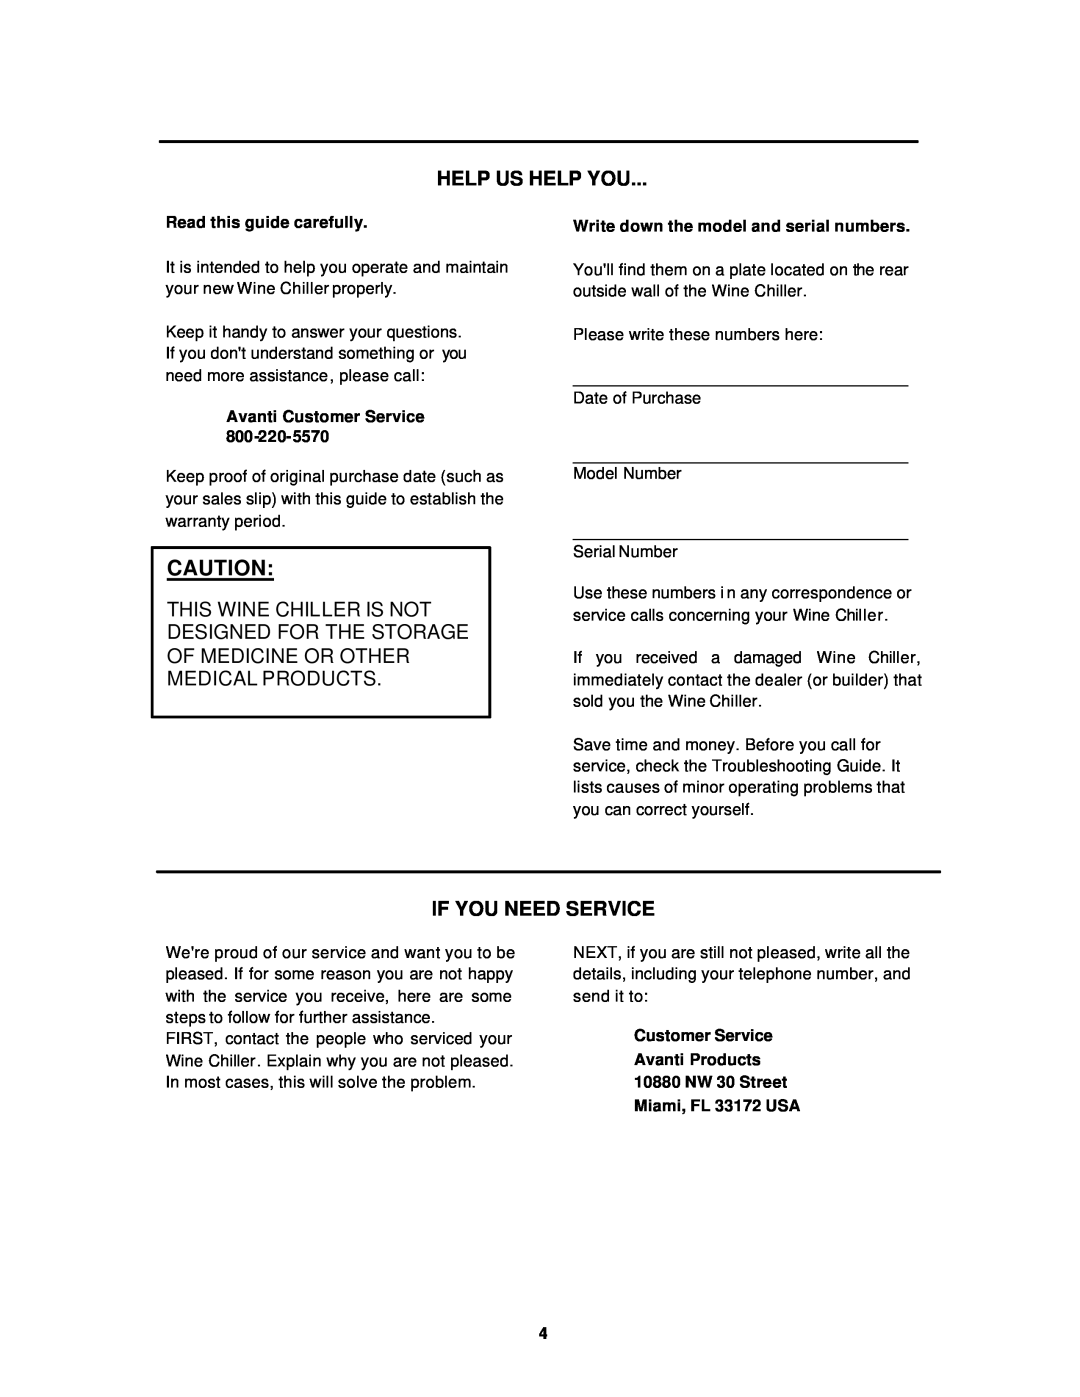 Avanti EWC16B instruction manual Help Us Help You, If You Need Service, Read this guide carefully, Avanti Customer Service 